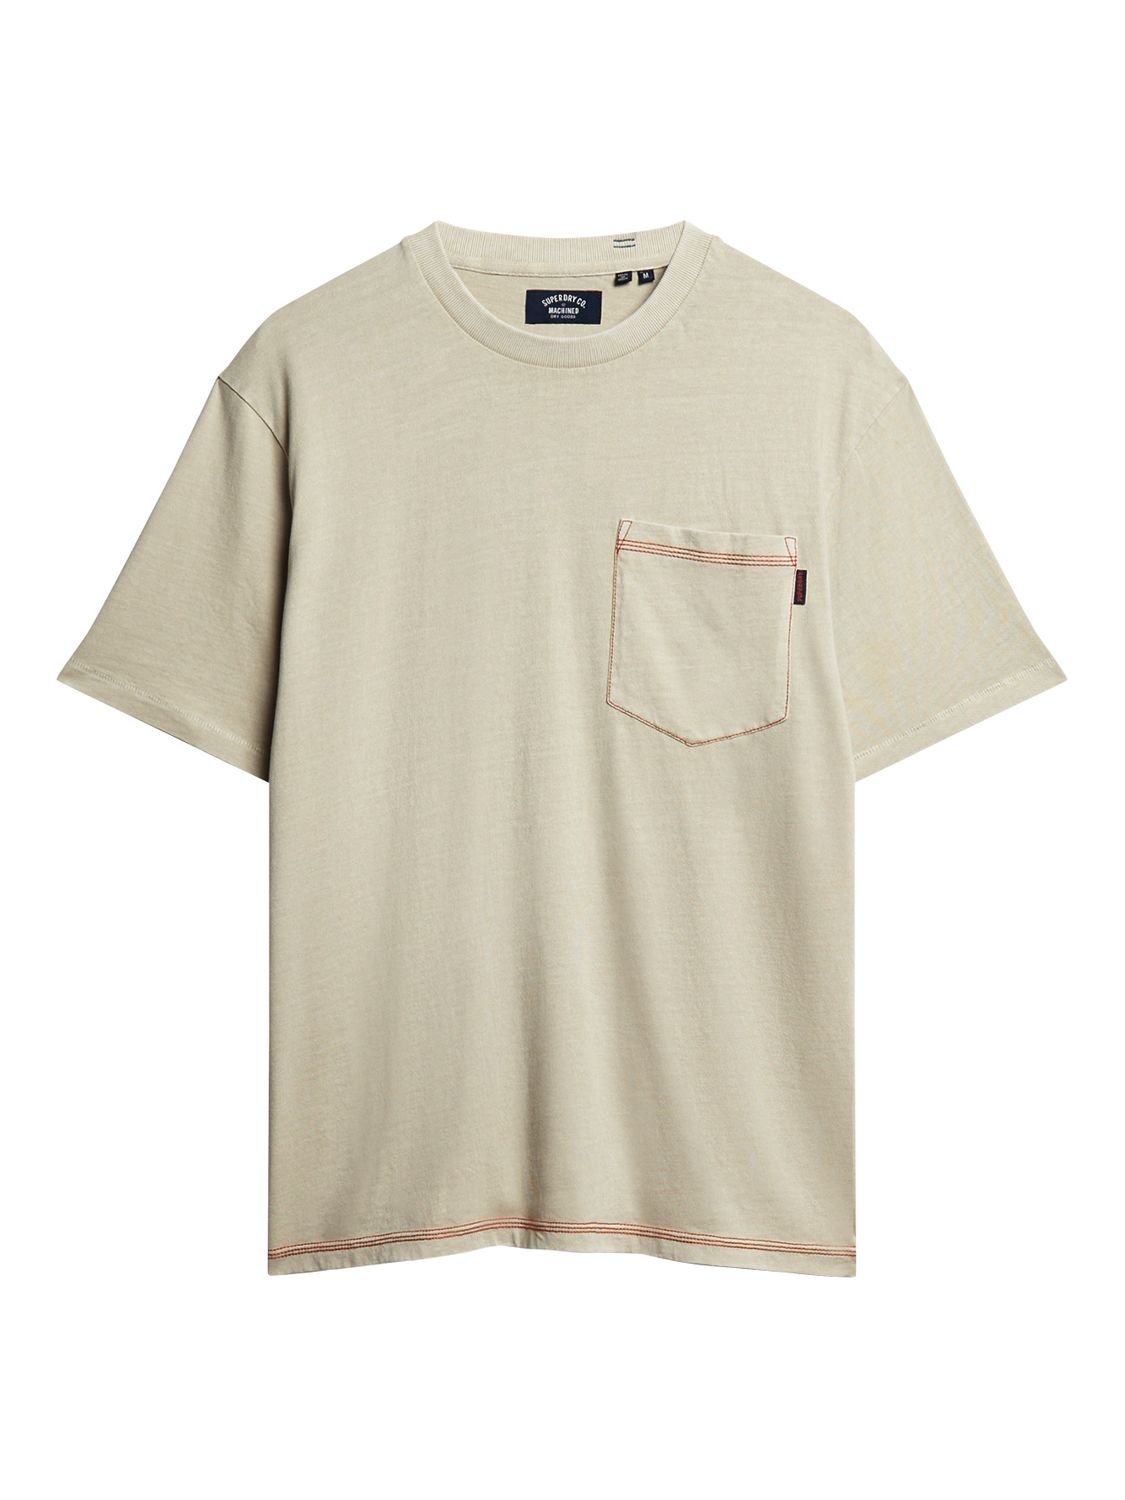 Superdry Contrast Stitch Pocket T-Shirt, Pelican Beige, L